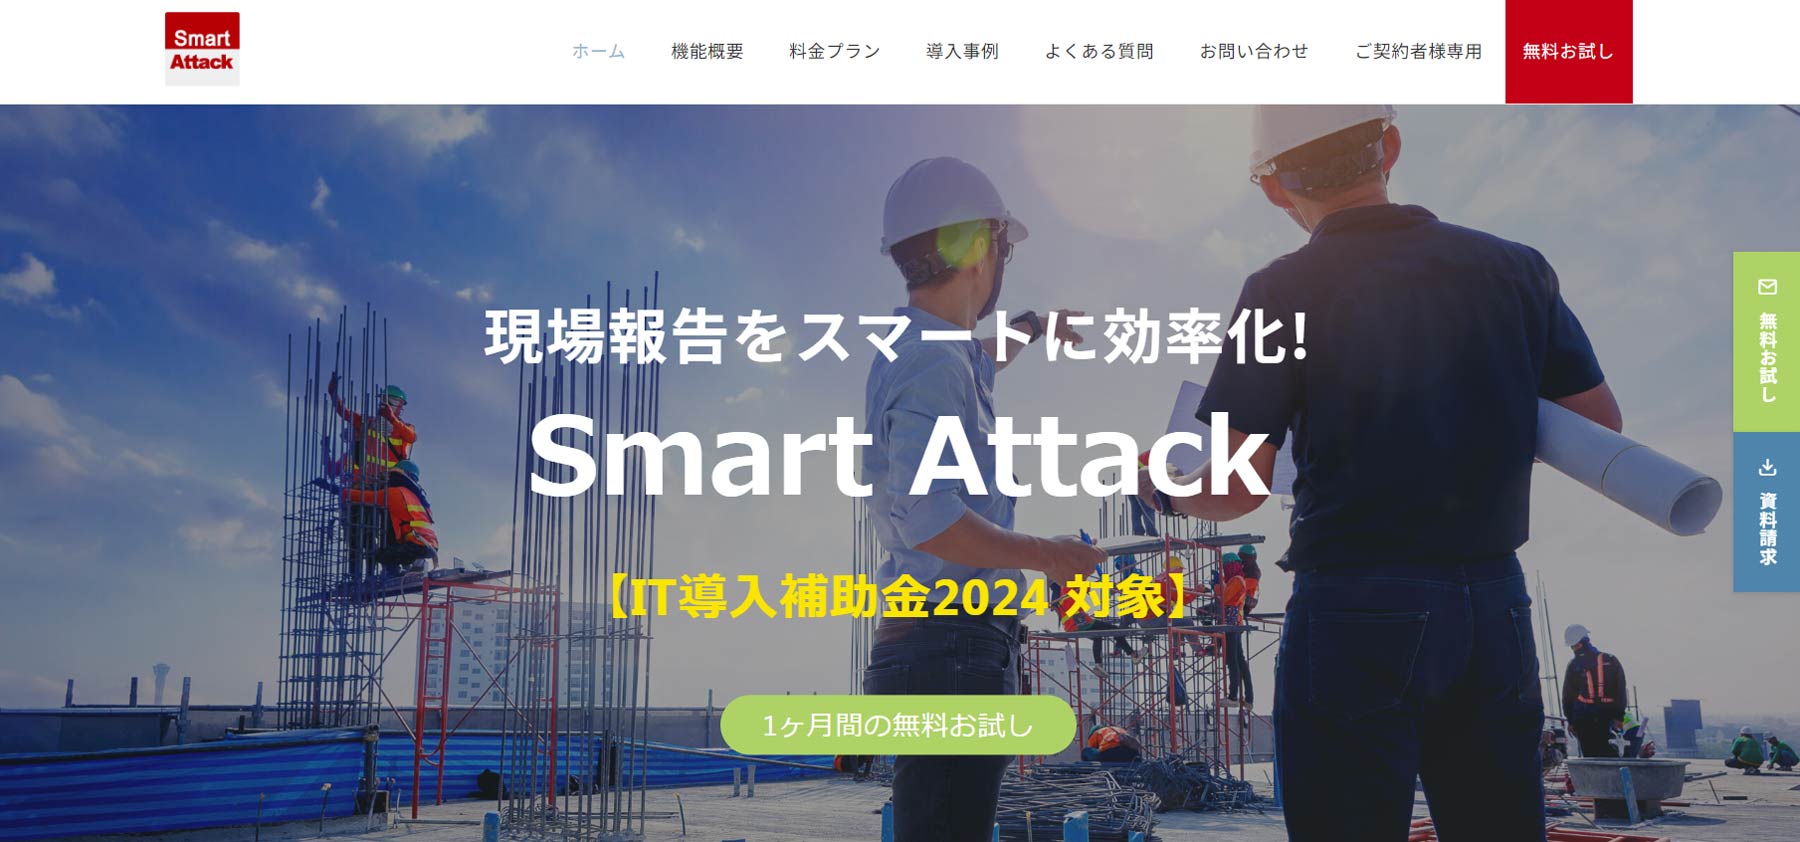 Smart Attack公式Webサイト